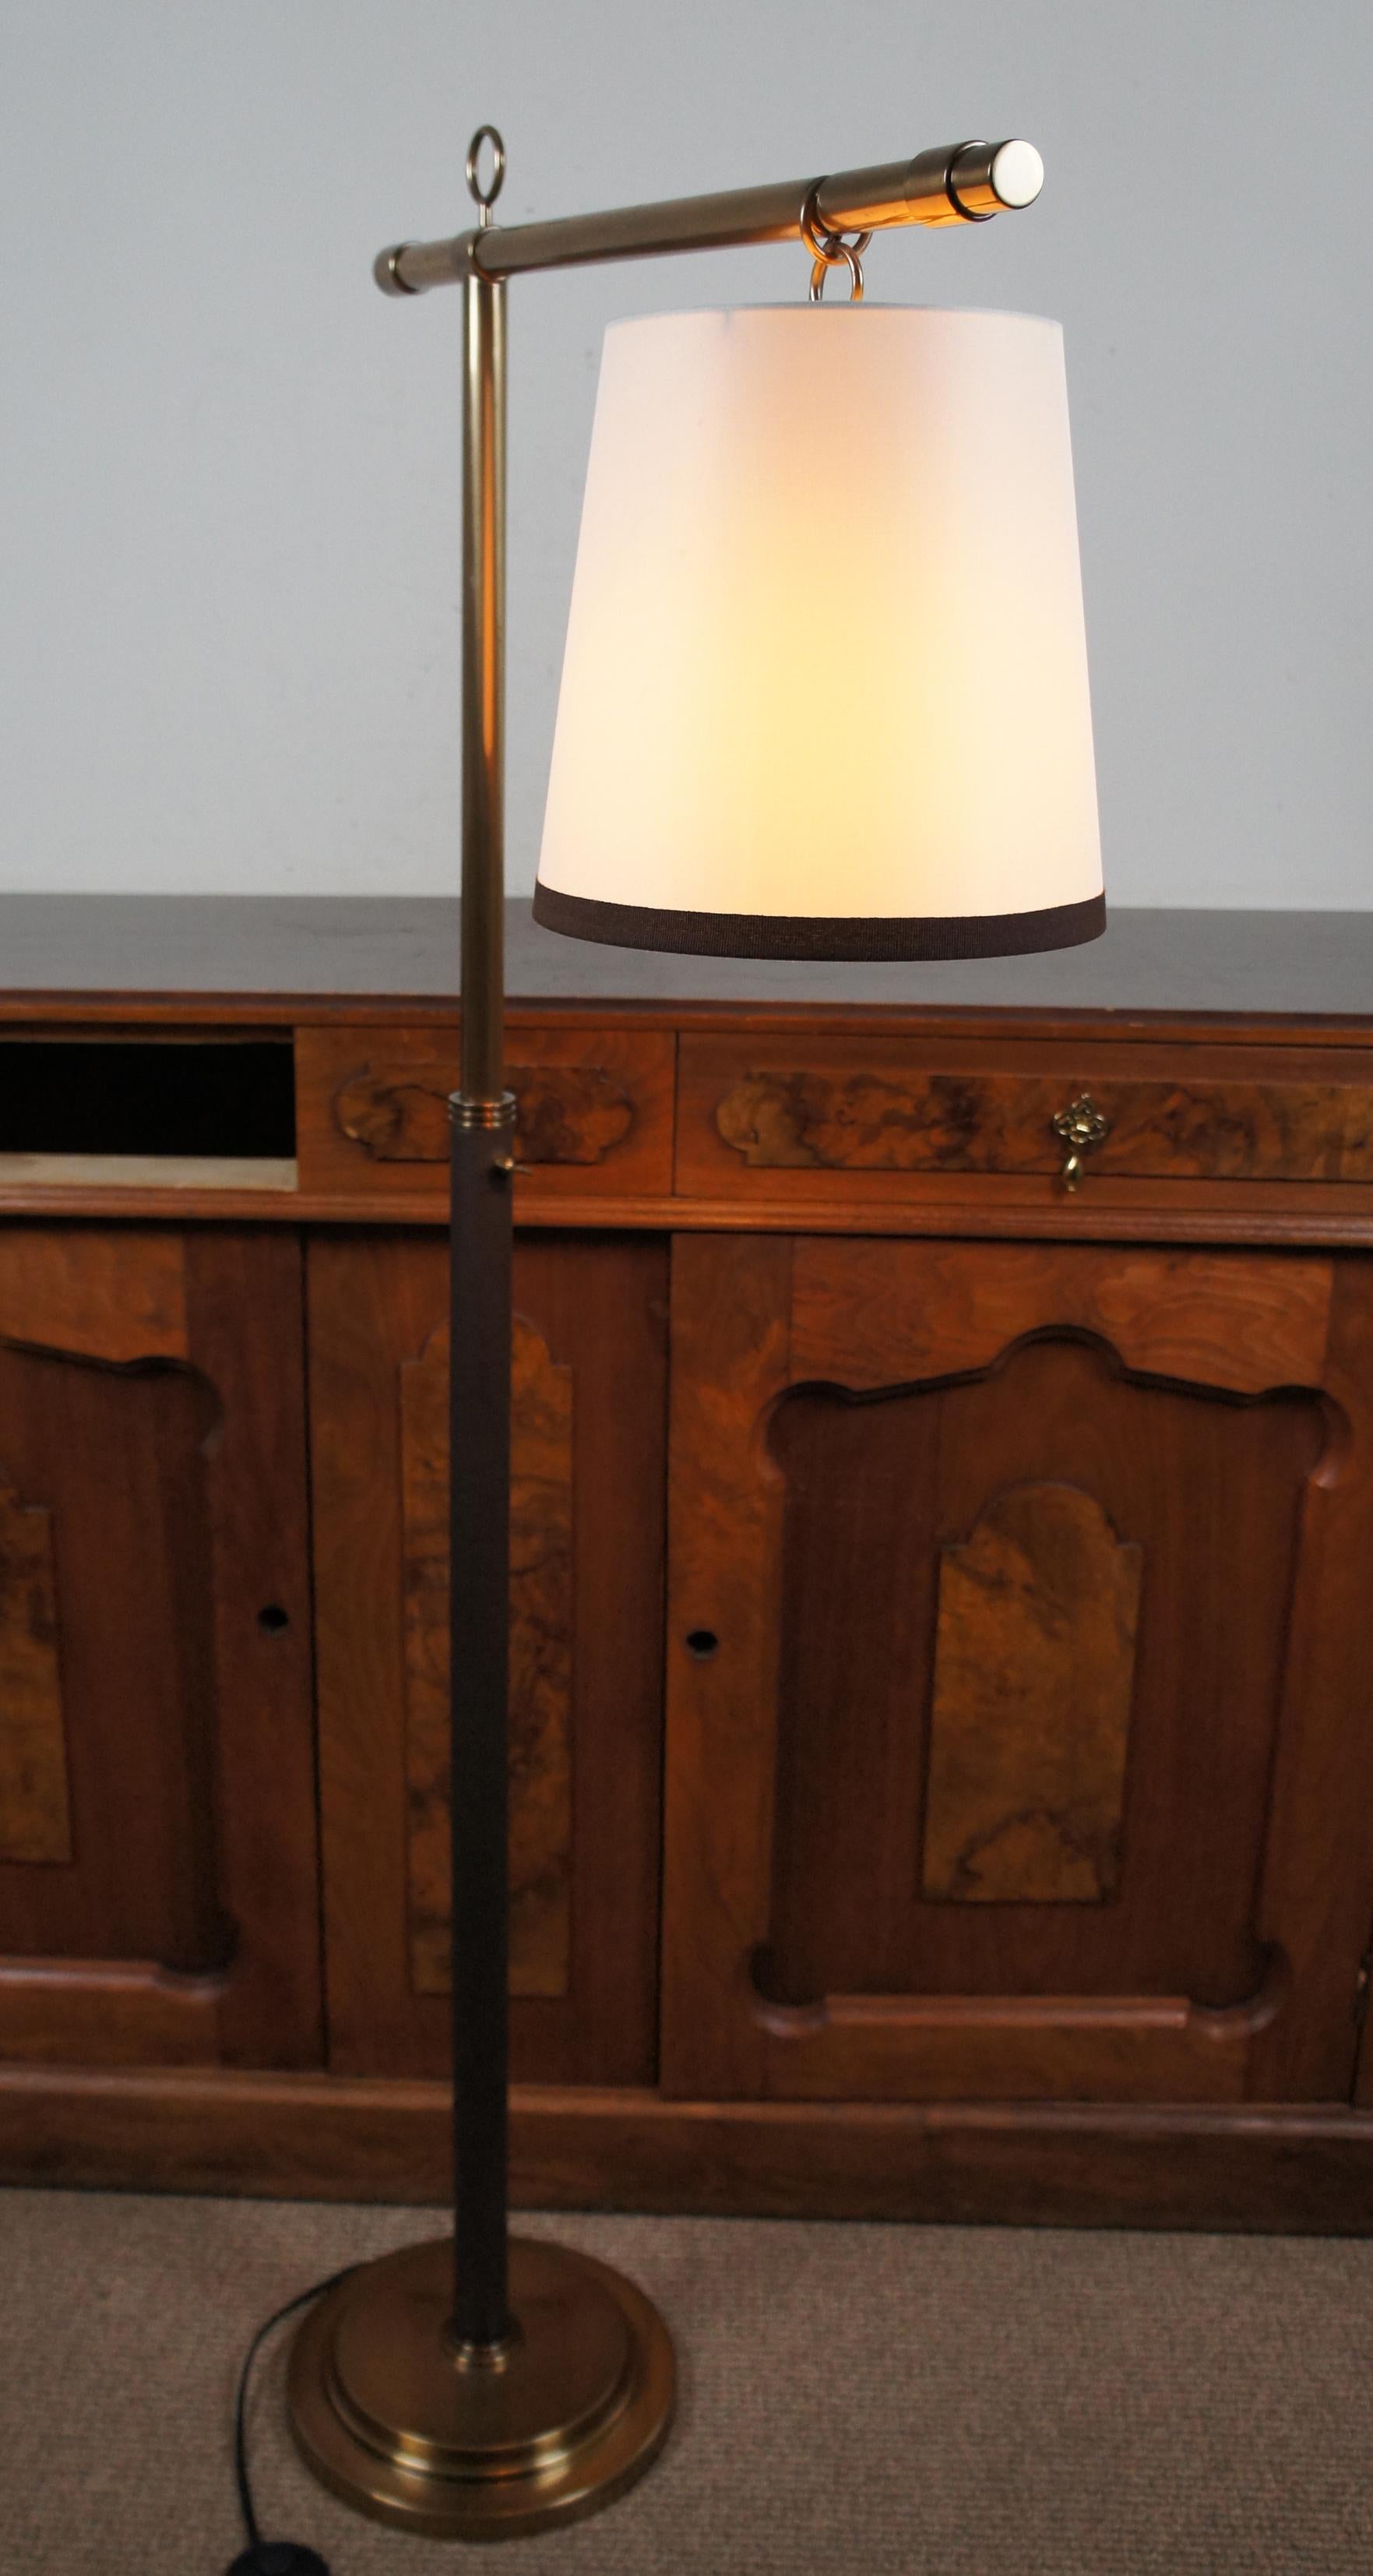 Baker Furniture Peony Floor Lamp Laura Kirar LK131 Brass Leather Adjustable 2